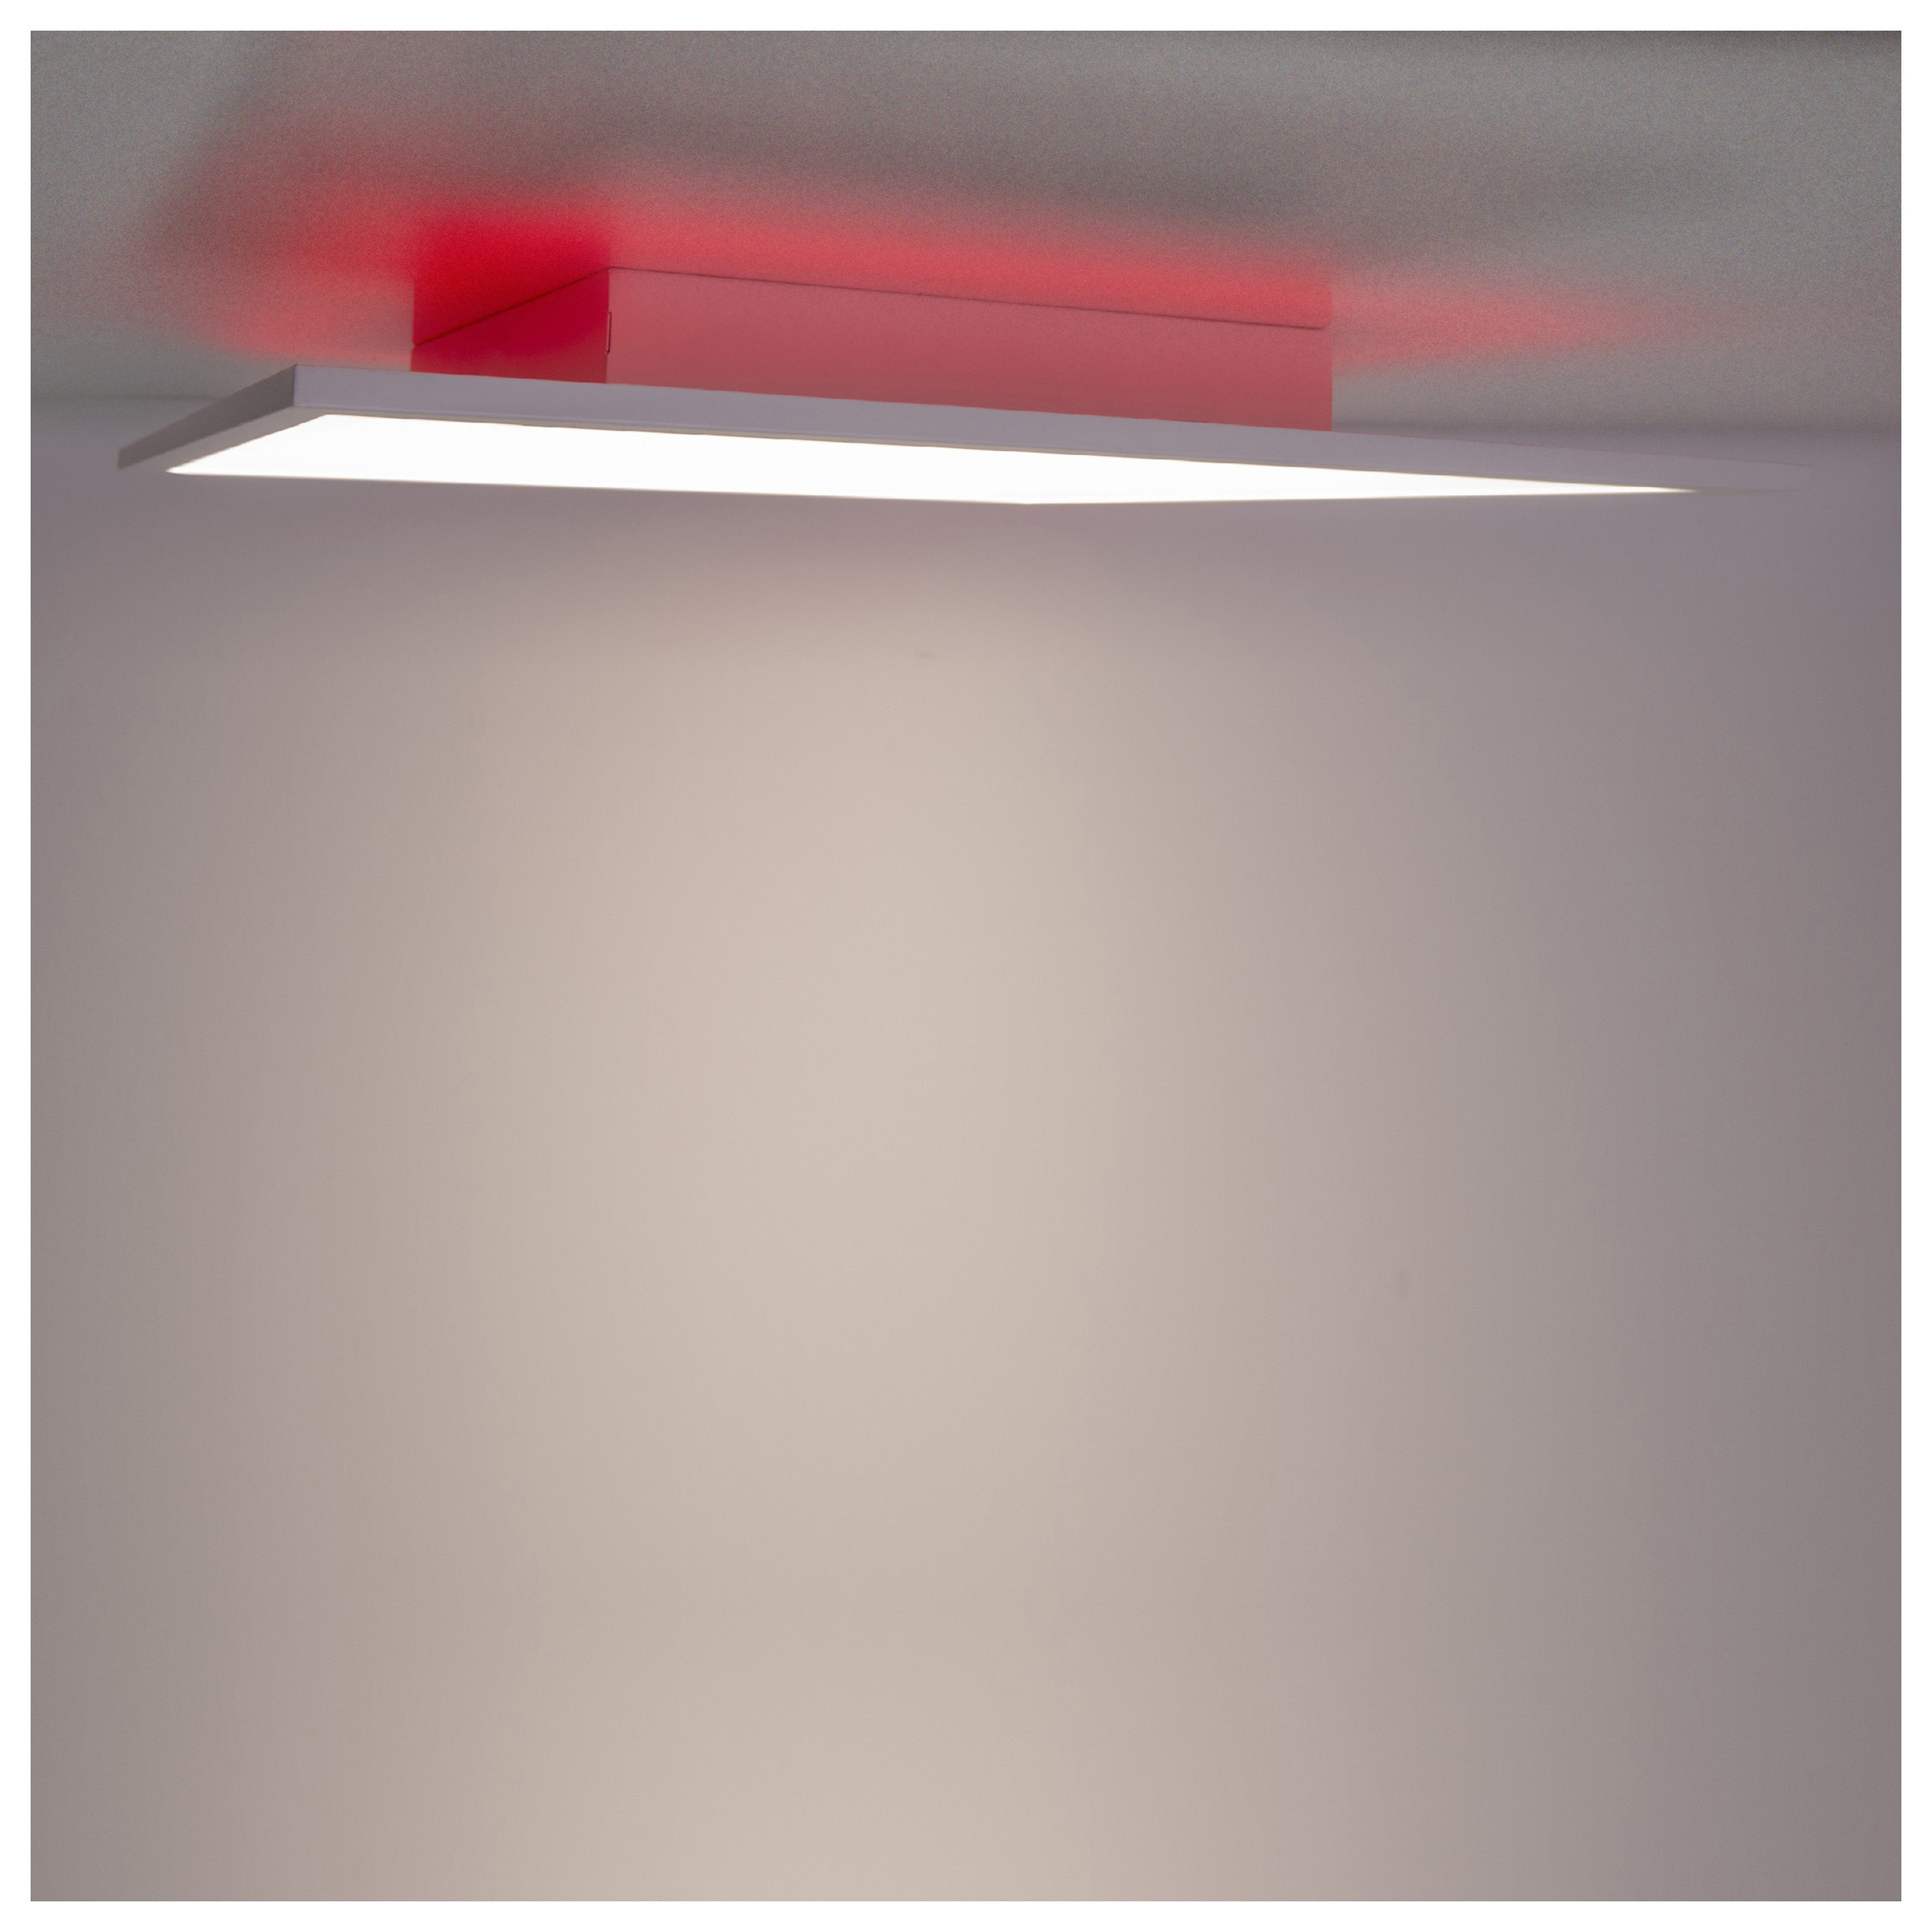 Näve Leuchten Smart Home LED Backlight Panel s:60cm Farbe: weiß